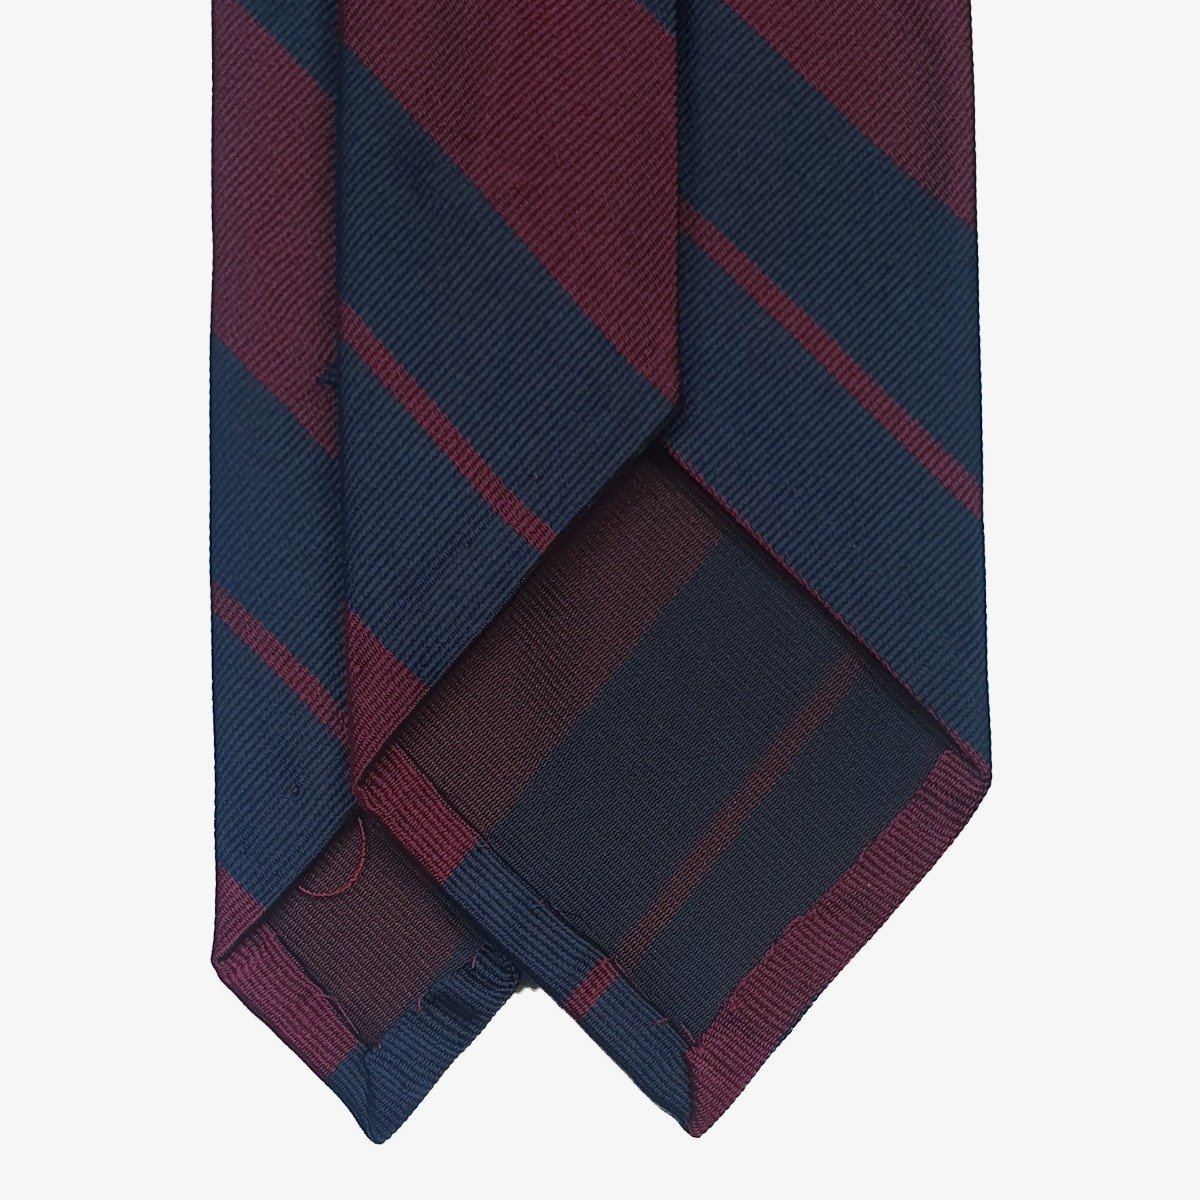 Shibumi Firenze navy and burgundy repp striped silk tie